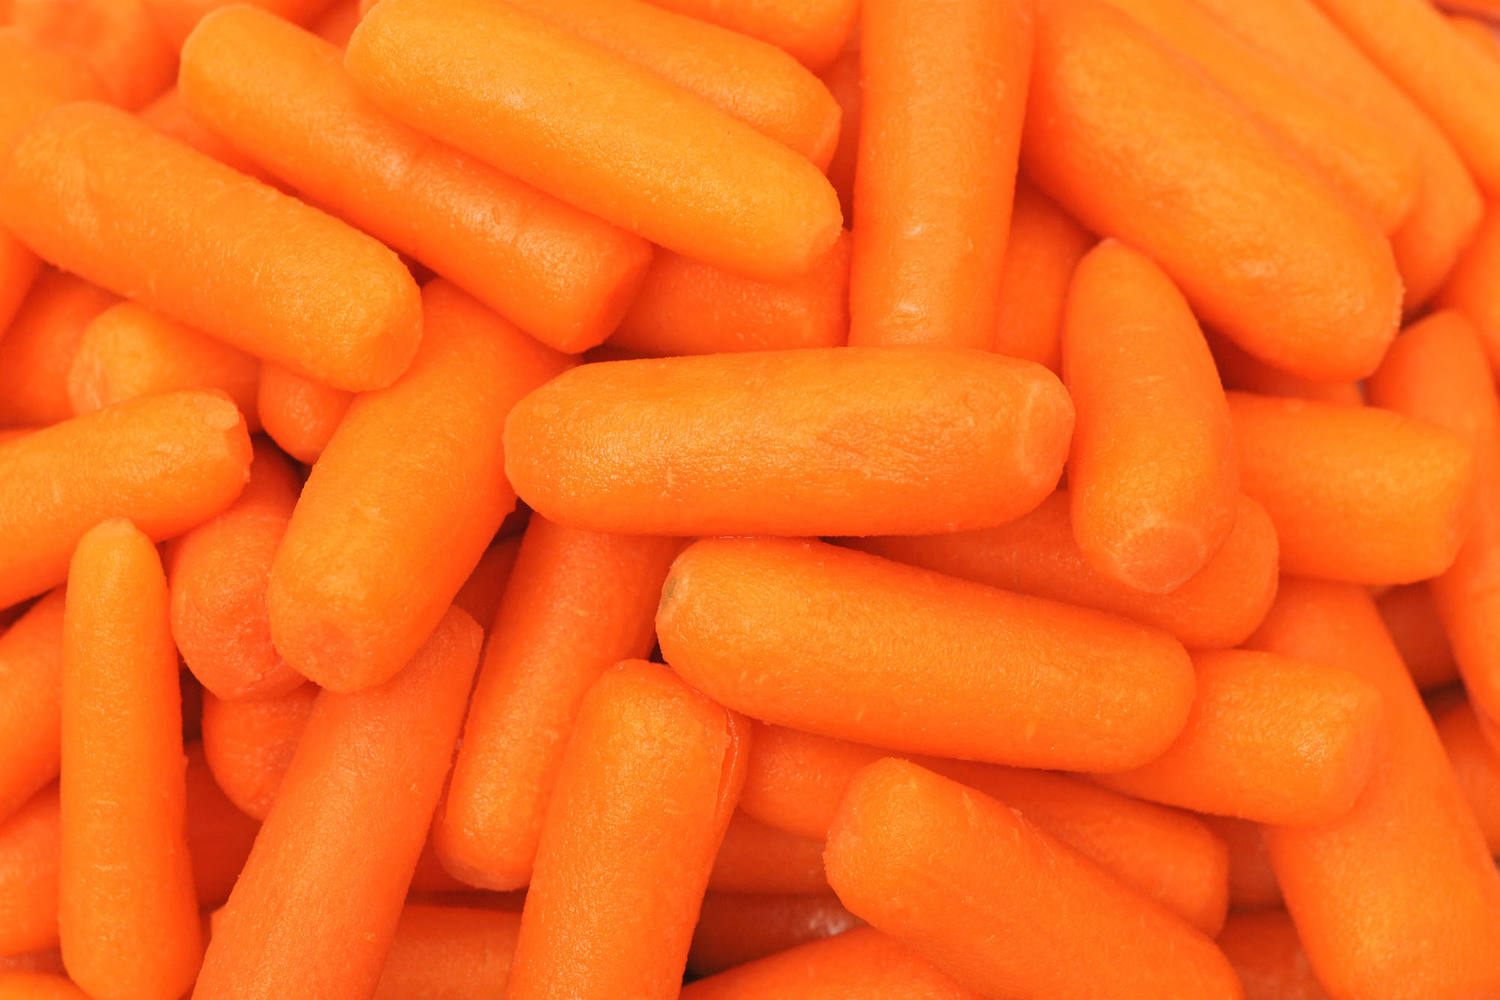 Baby carrots medium 1kg stuk 3